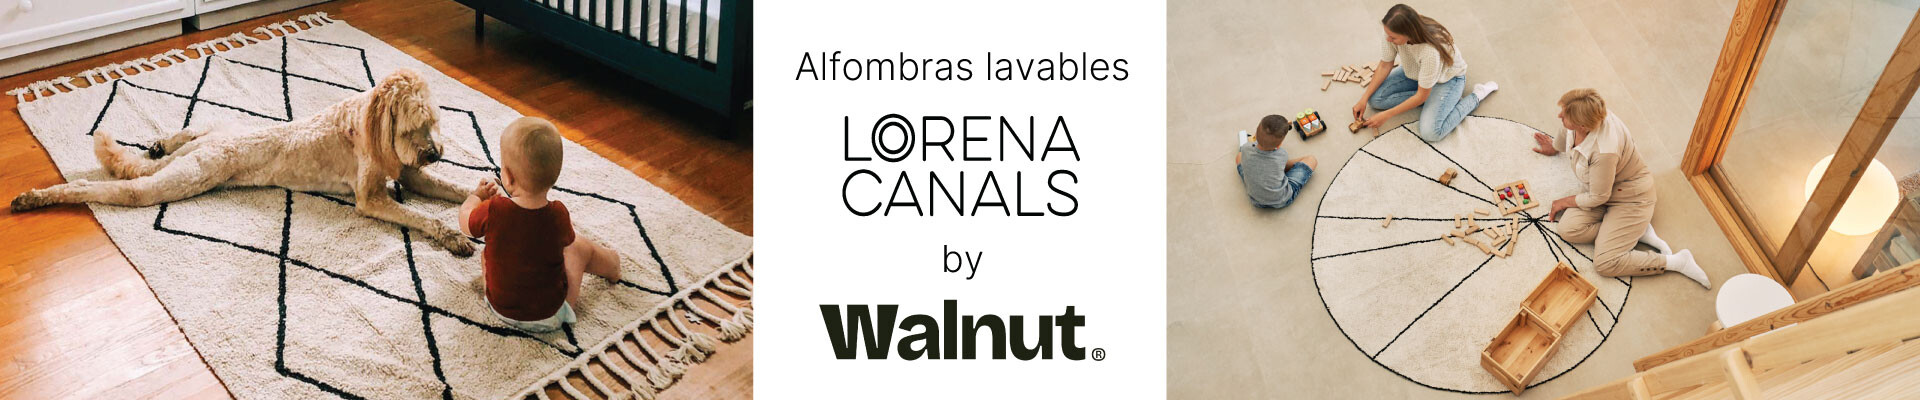 Lorena canals 1